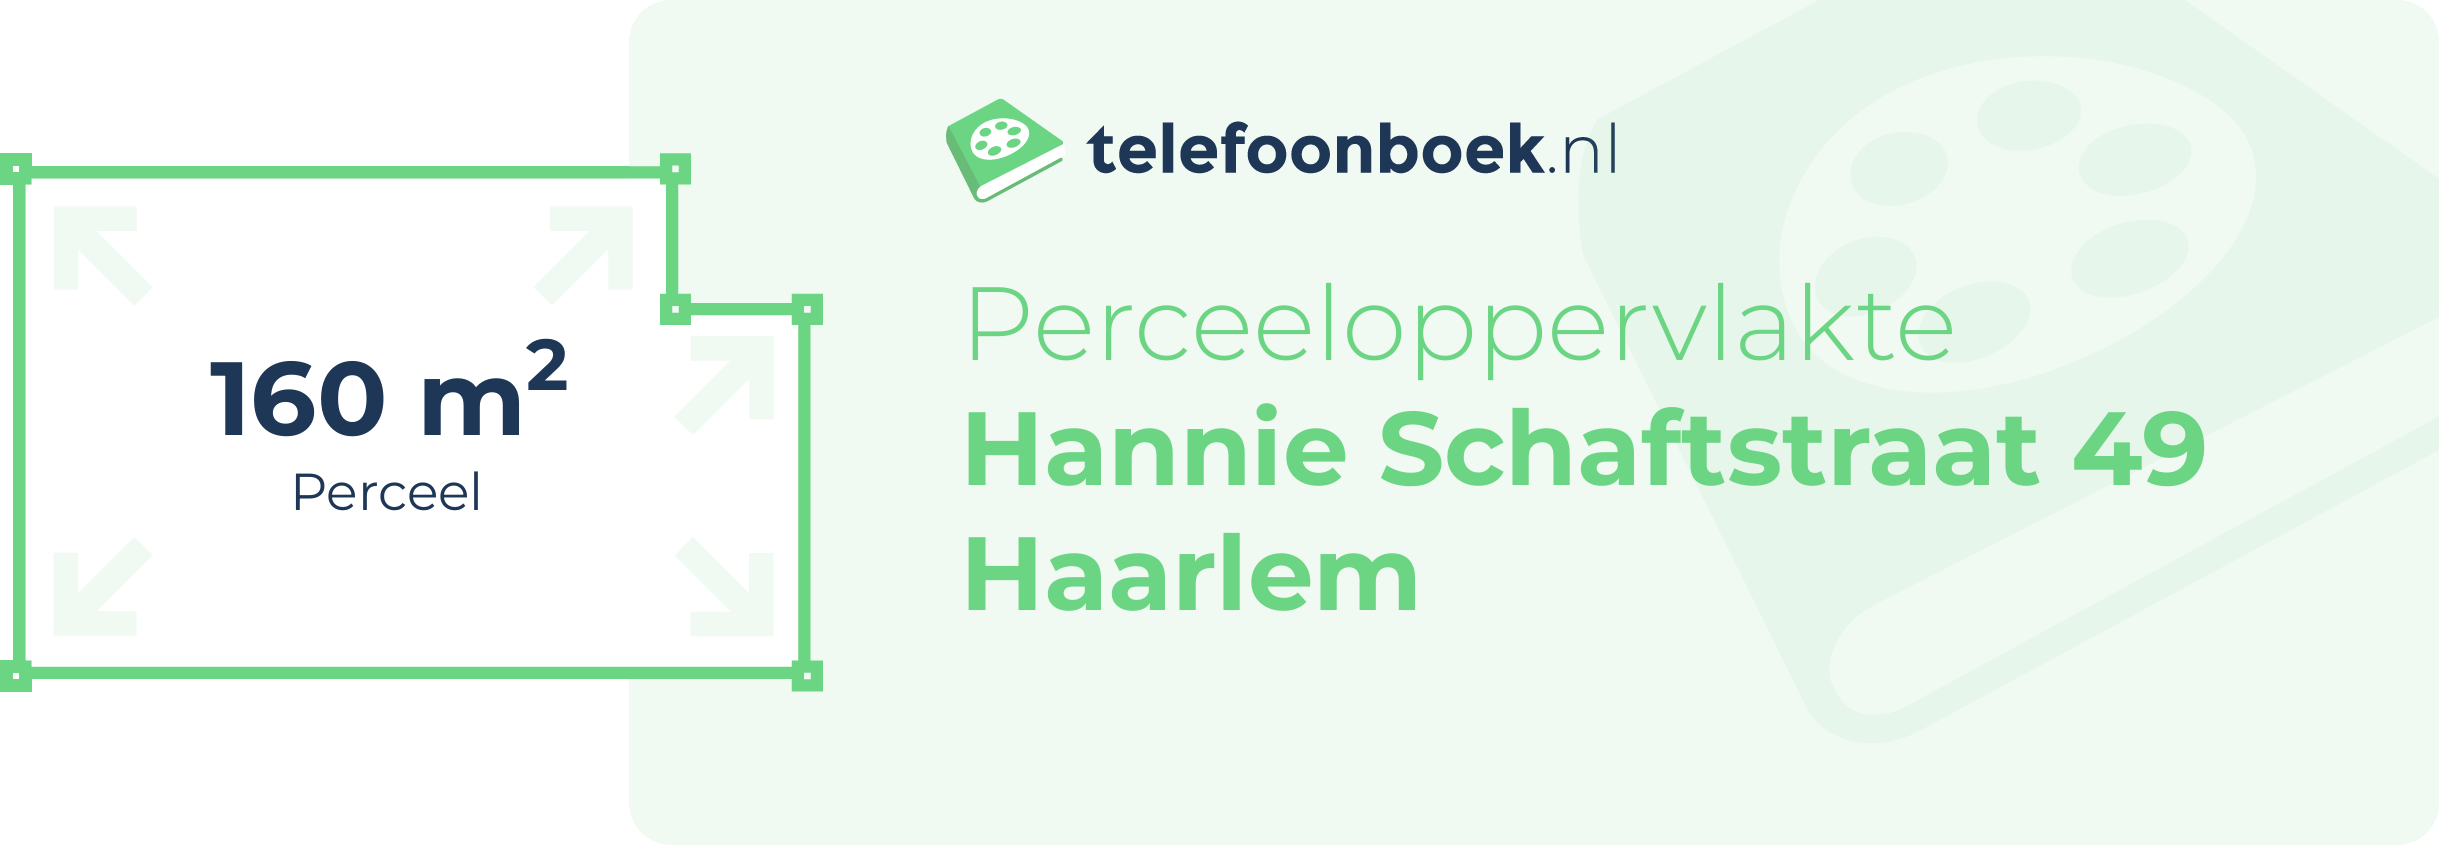 Perceeloppervlakte Hannie Schaftstraat 49 Haarlem